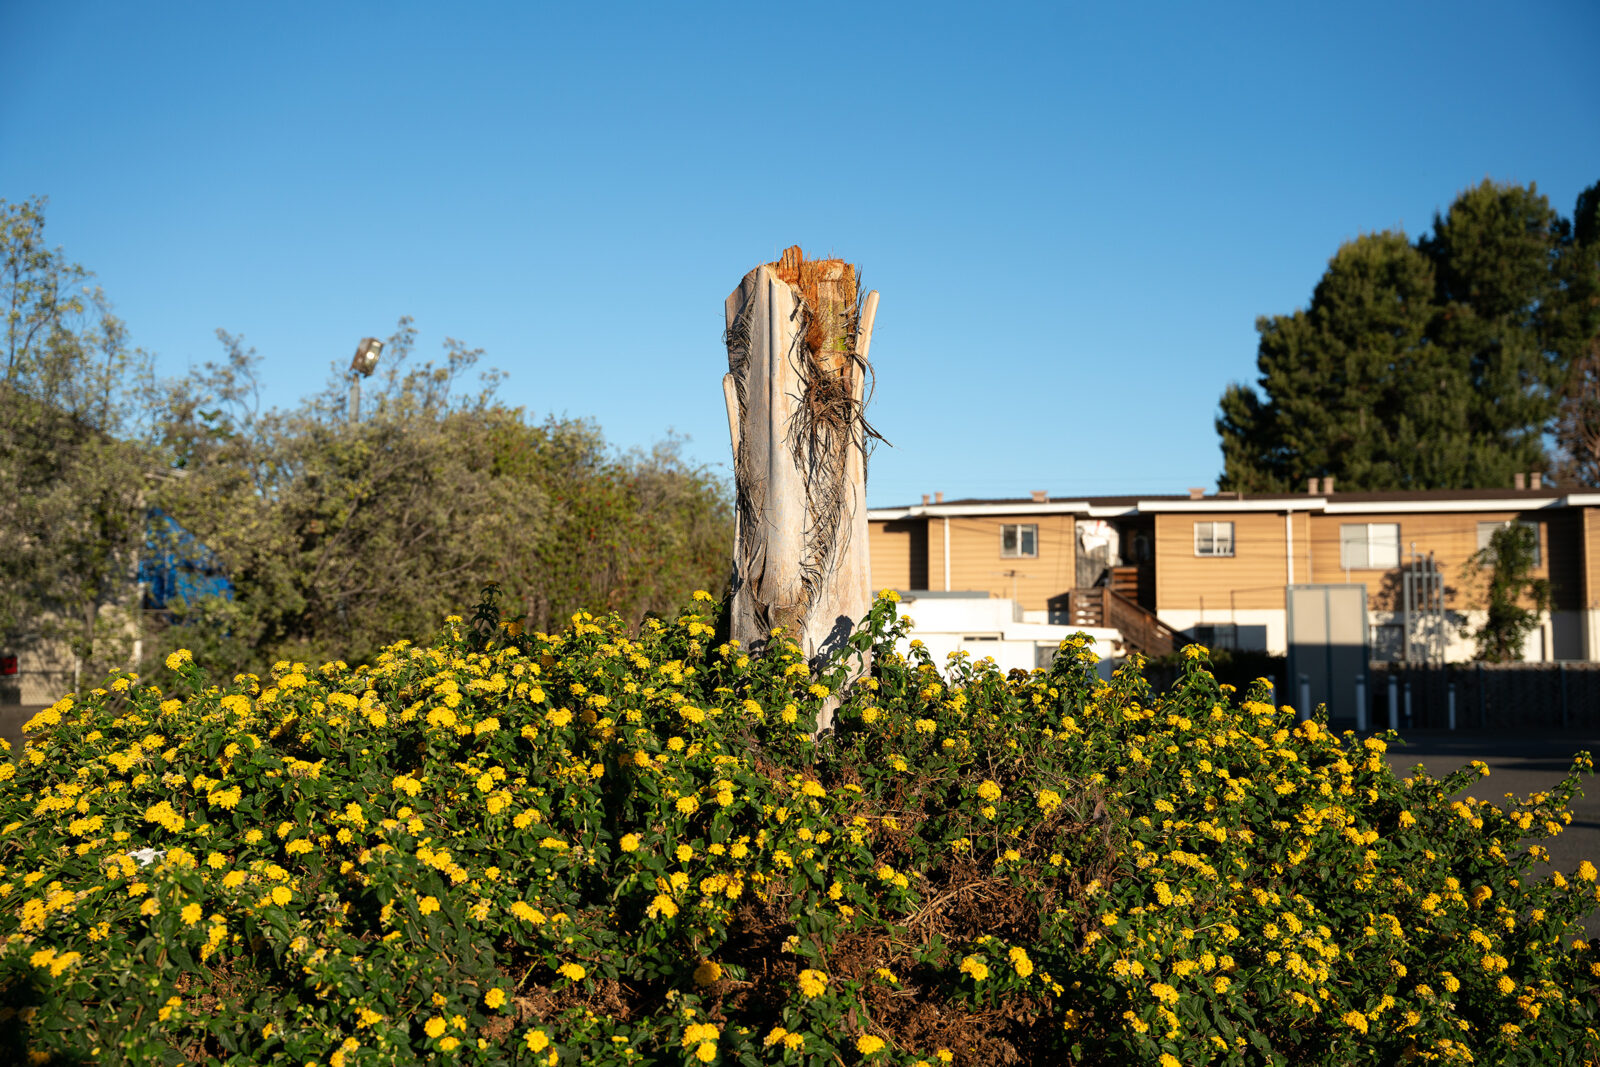 Oakland stump amid flowers - Florence Middleton